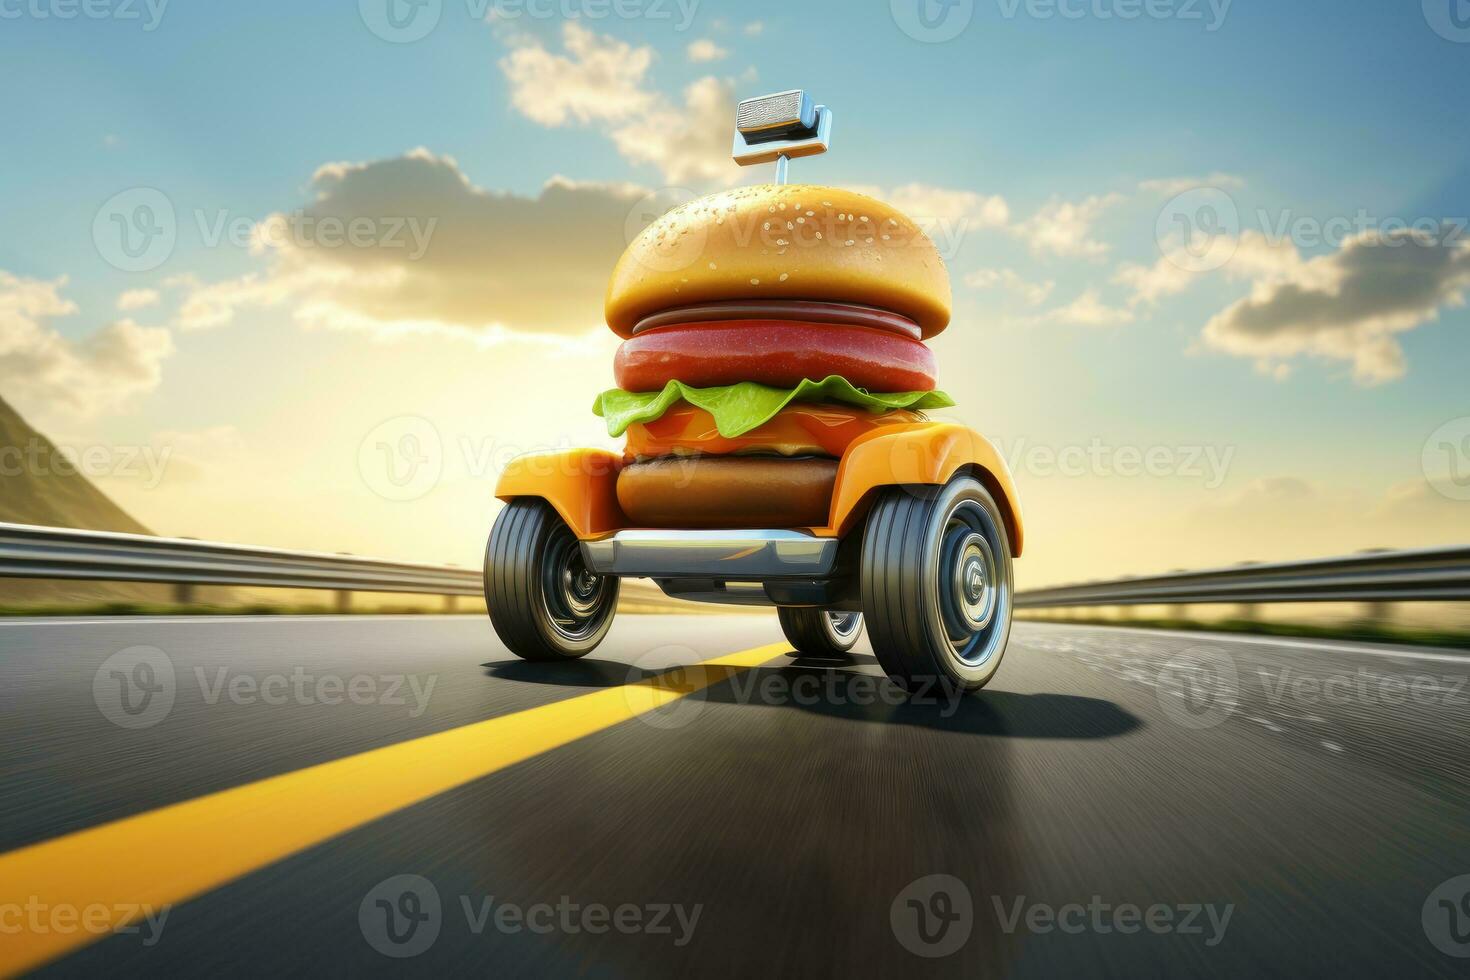 hamburger consegna. veloce Hamburger macchina. hamburger al formaggio come veloce cibo macchina. Hamburger guida su il strada. veloce cibo concetto foto